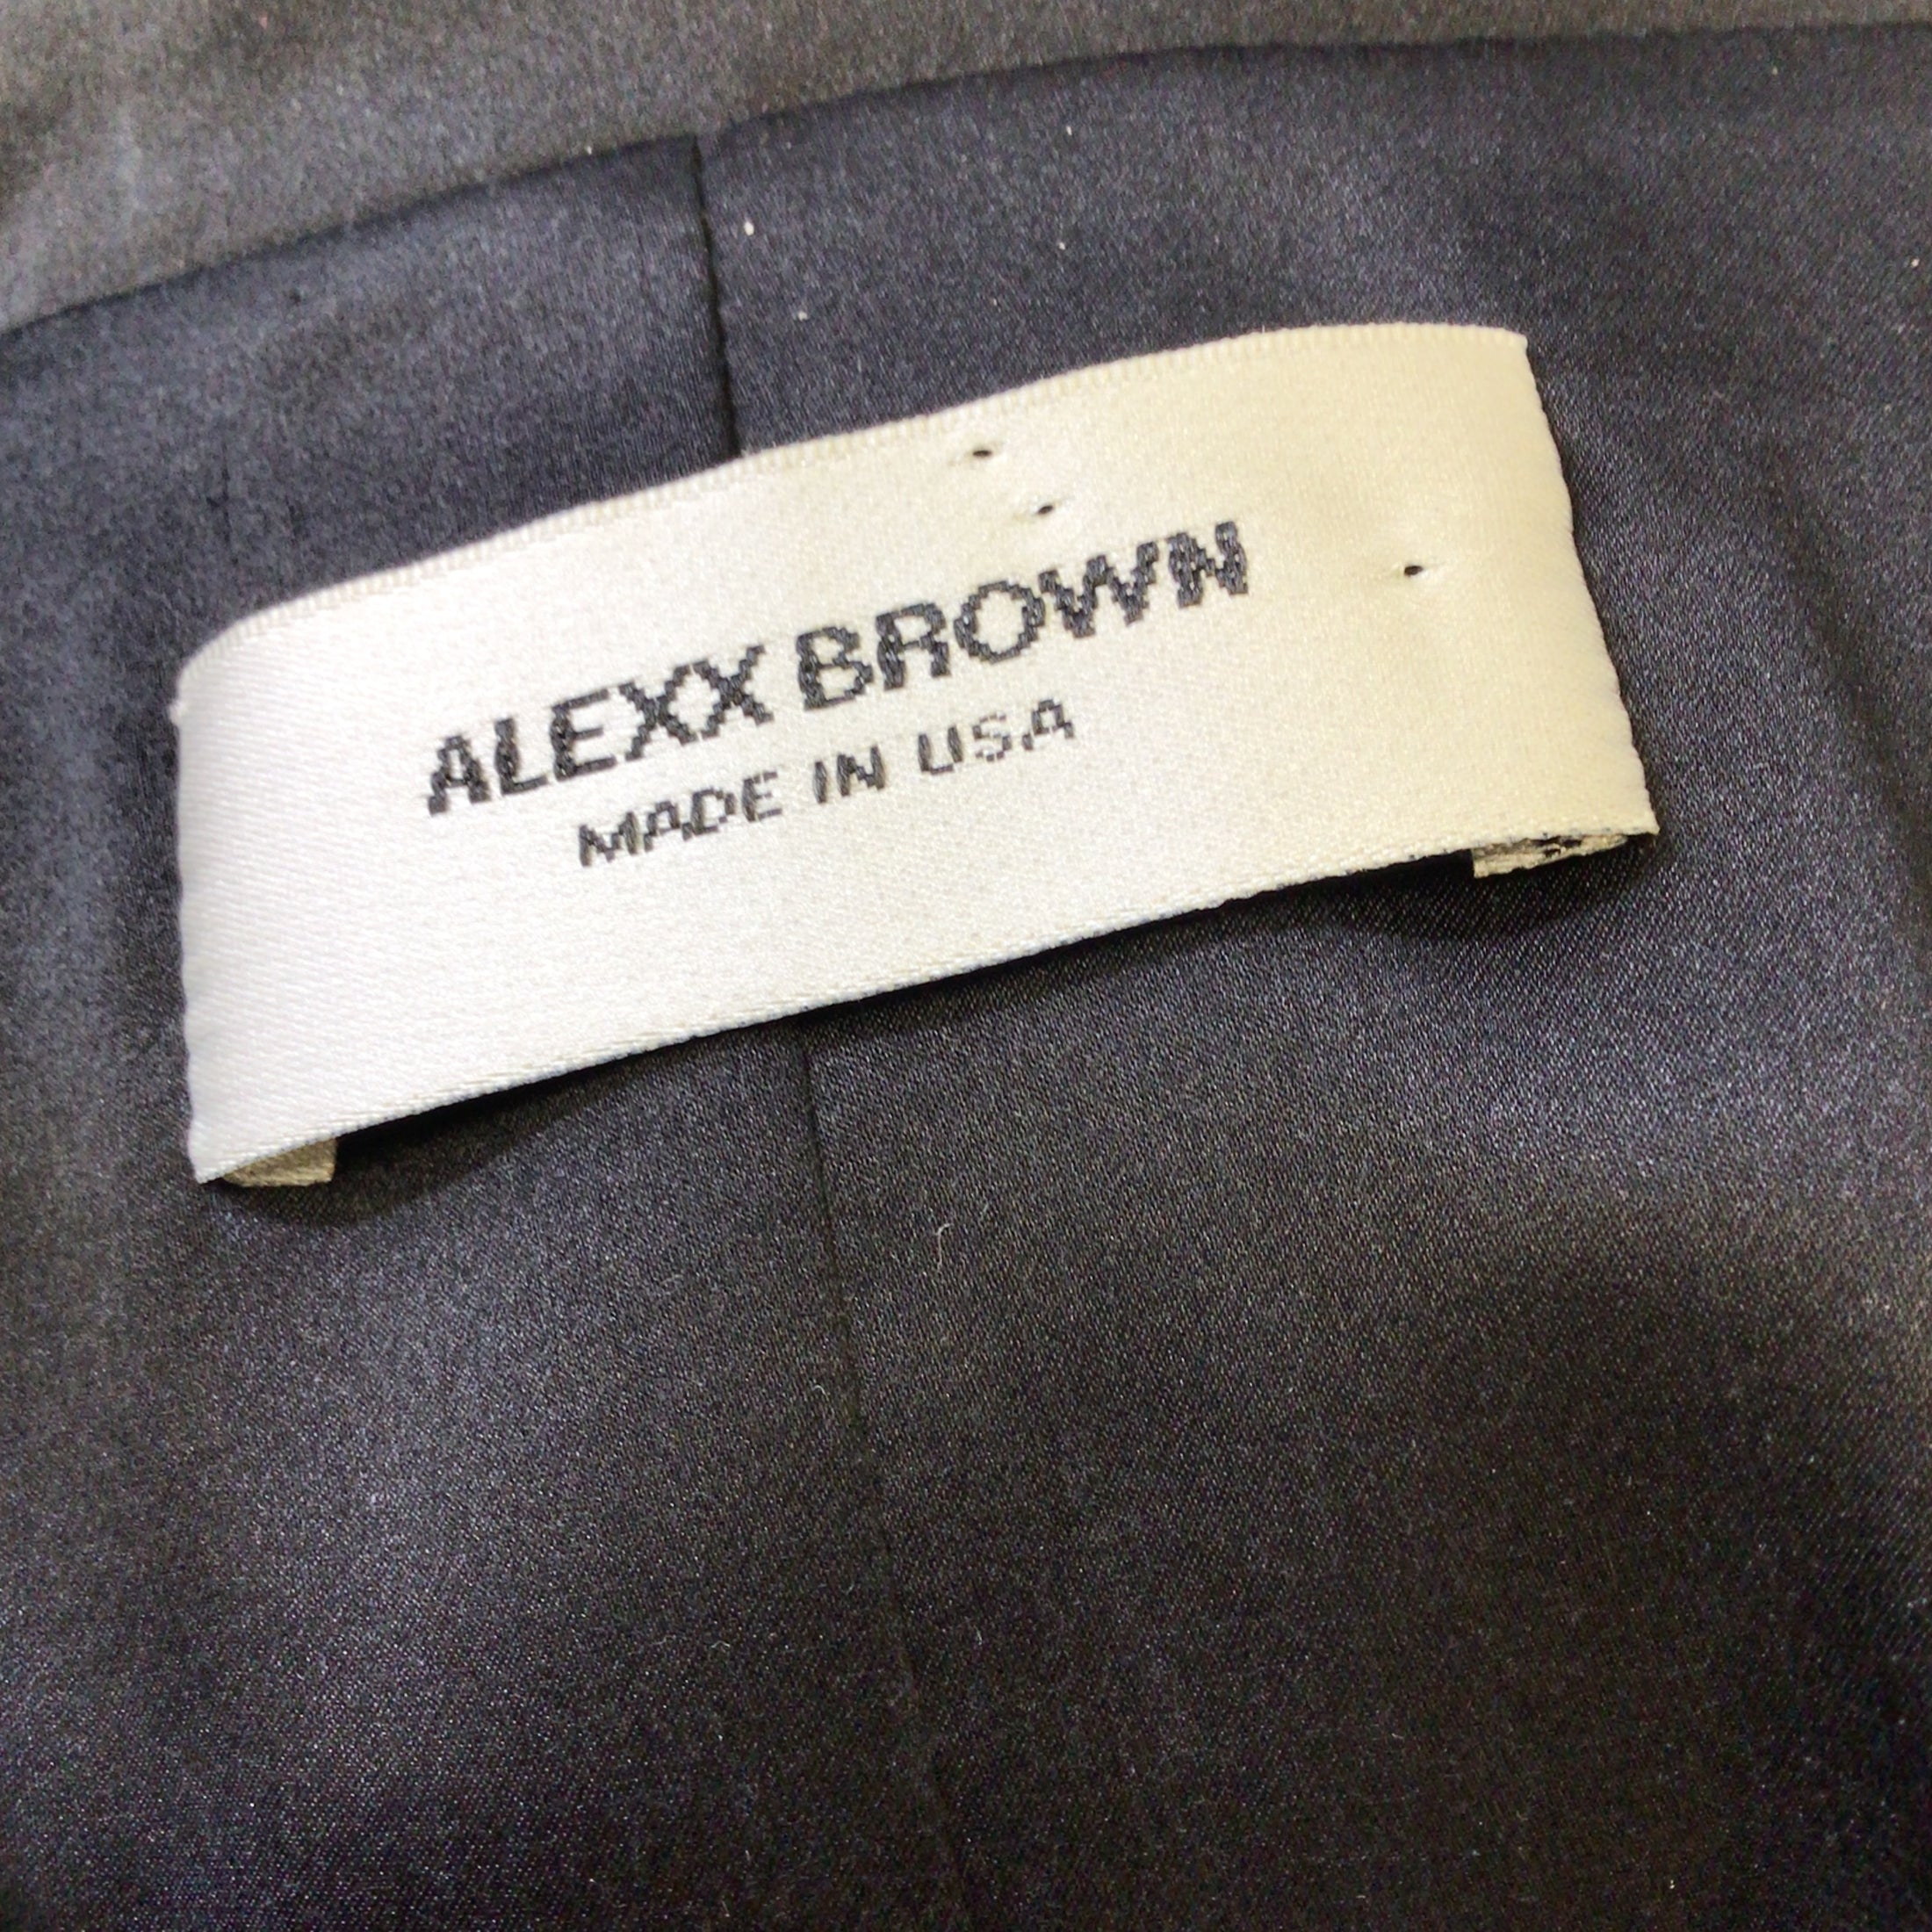 Alexx Brown Black Silk Kimono Biker Jacket